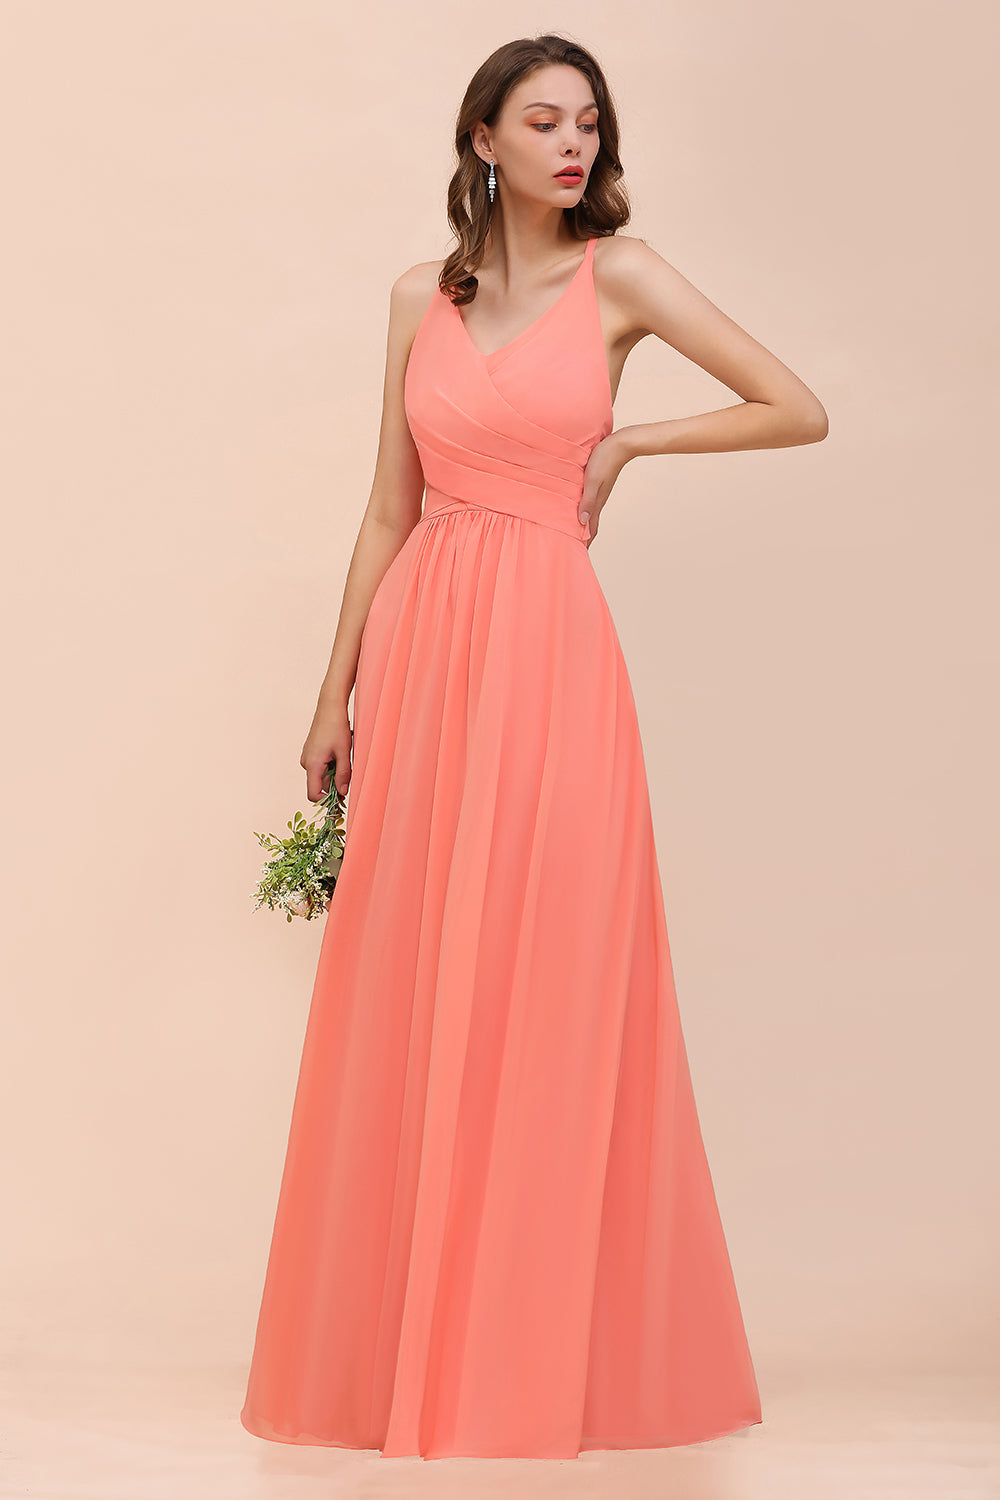 Glamorous V-Neck Coral Chiffon Bridesmaid Dress Affordable with Ruffle-27dress